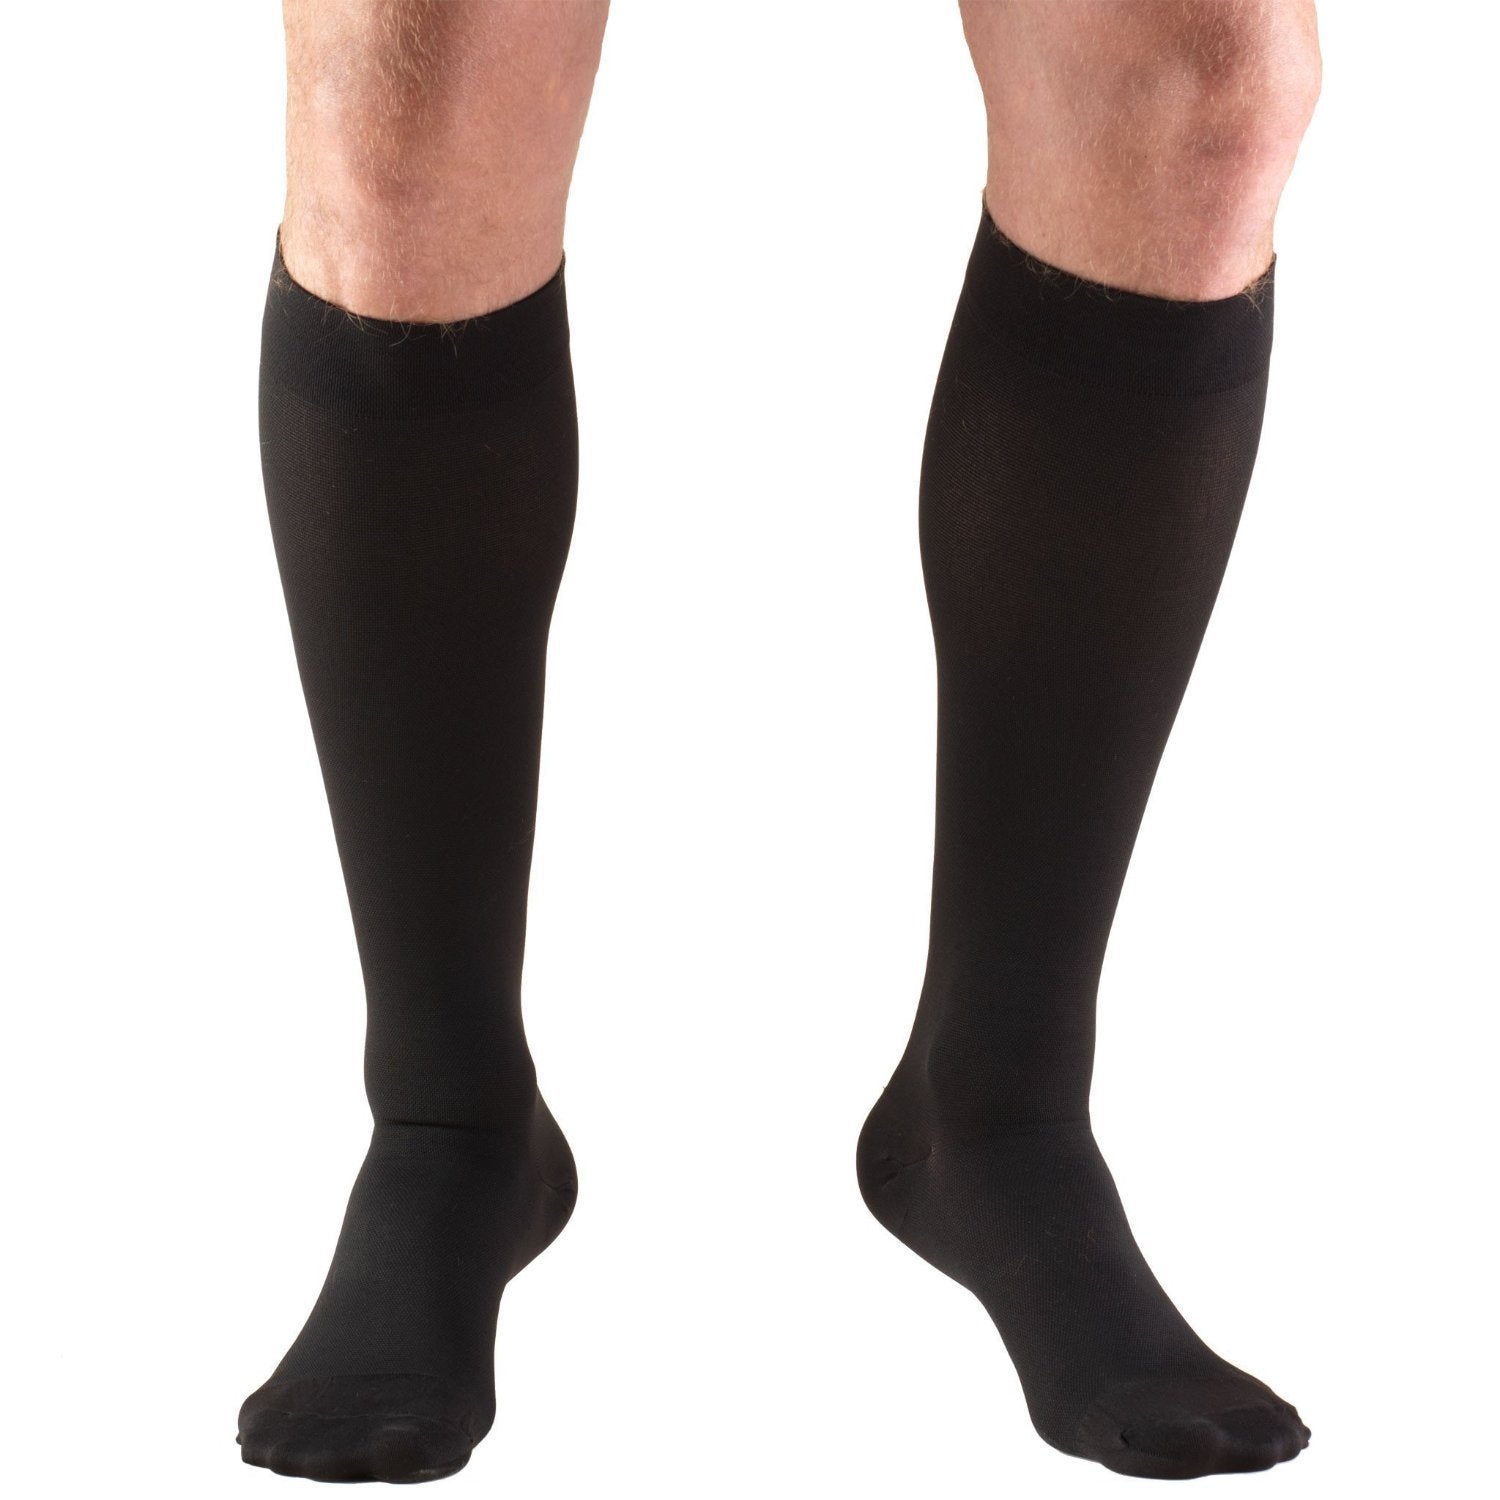 TRUFORM® MicroFiber Medical Knee High 20-30 mmHg, Black